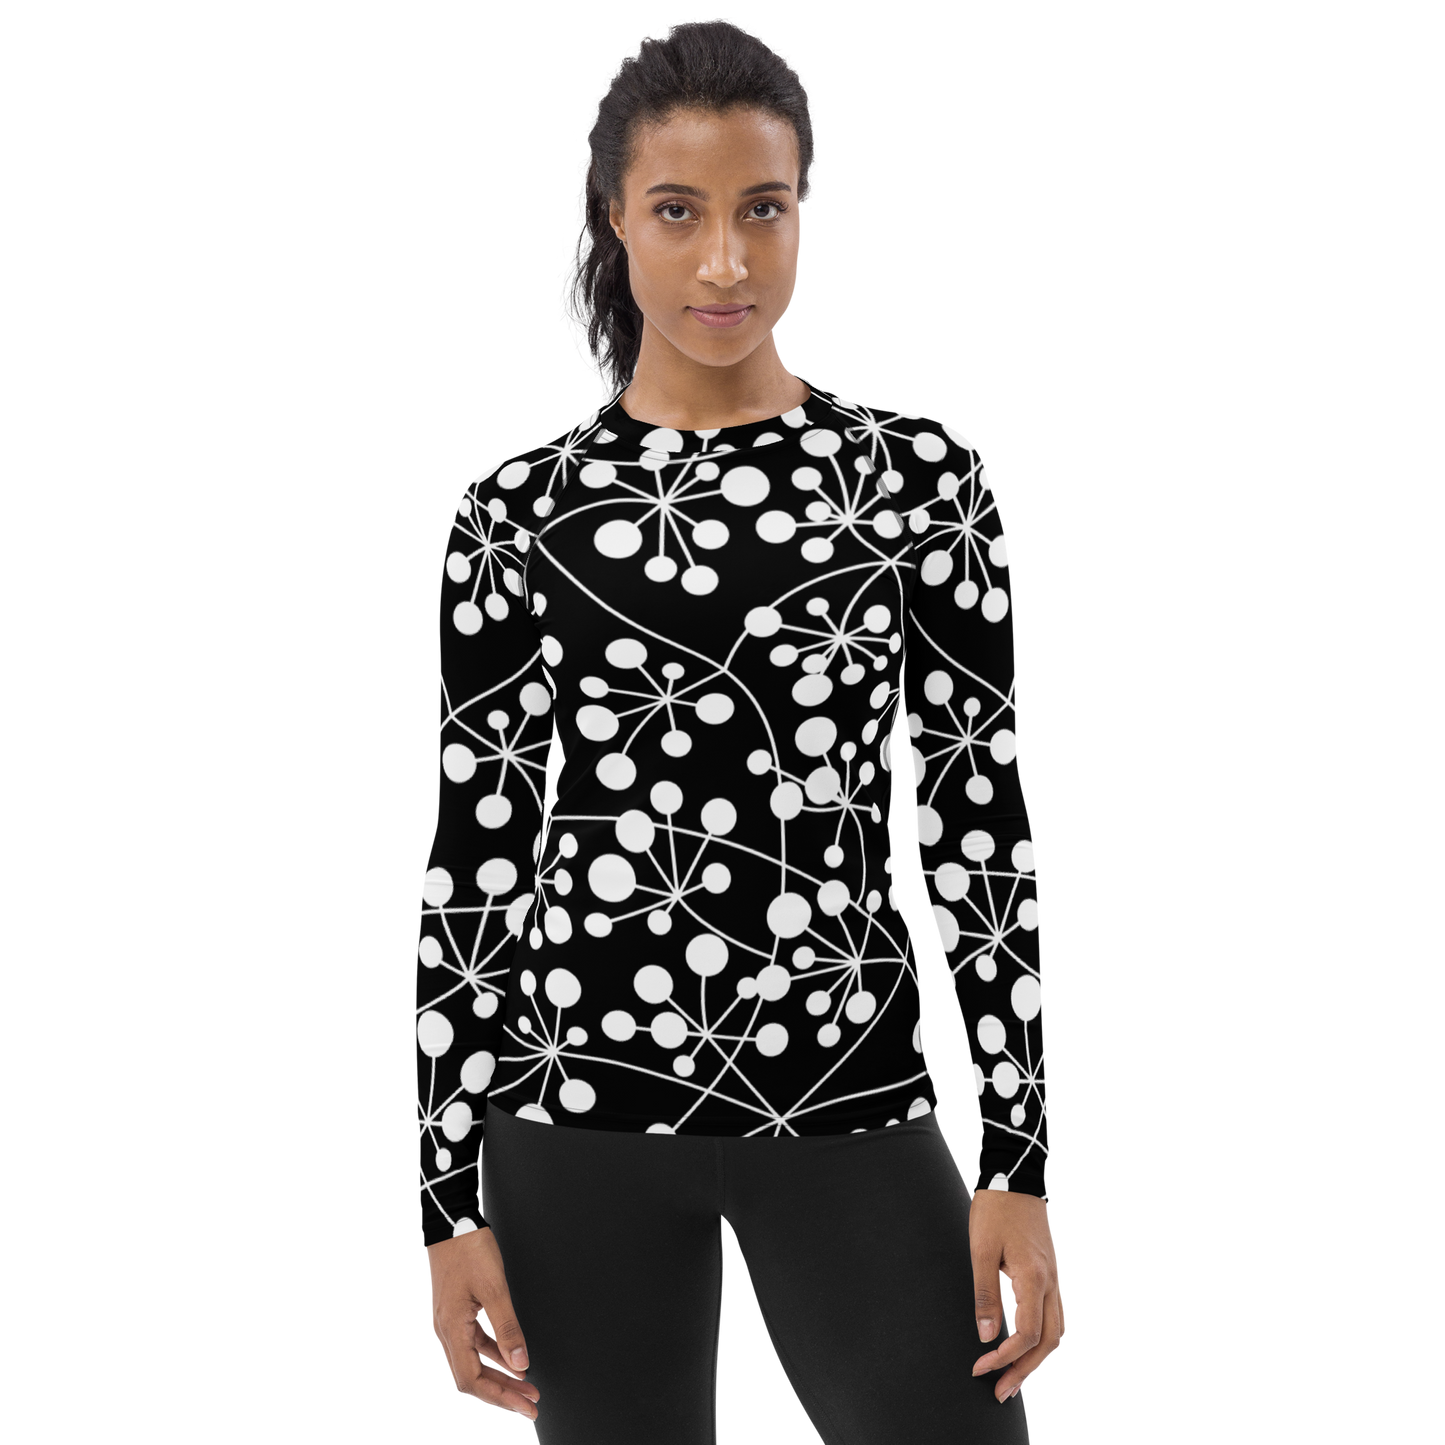 Women's Compression T-Shirt ❯ Arboricool ❯ White on Black